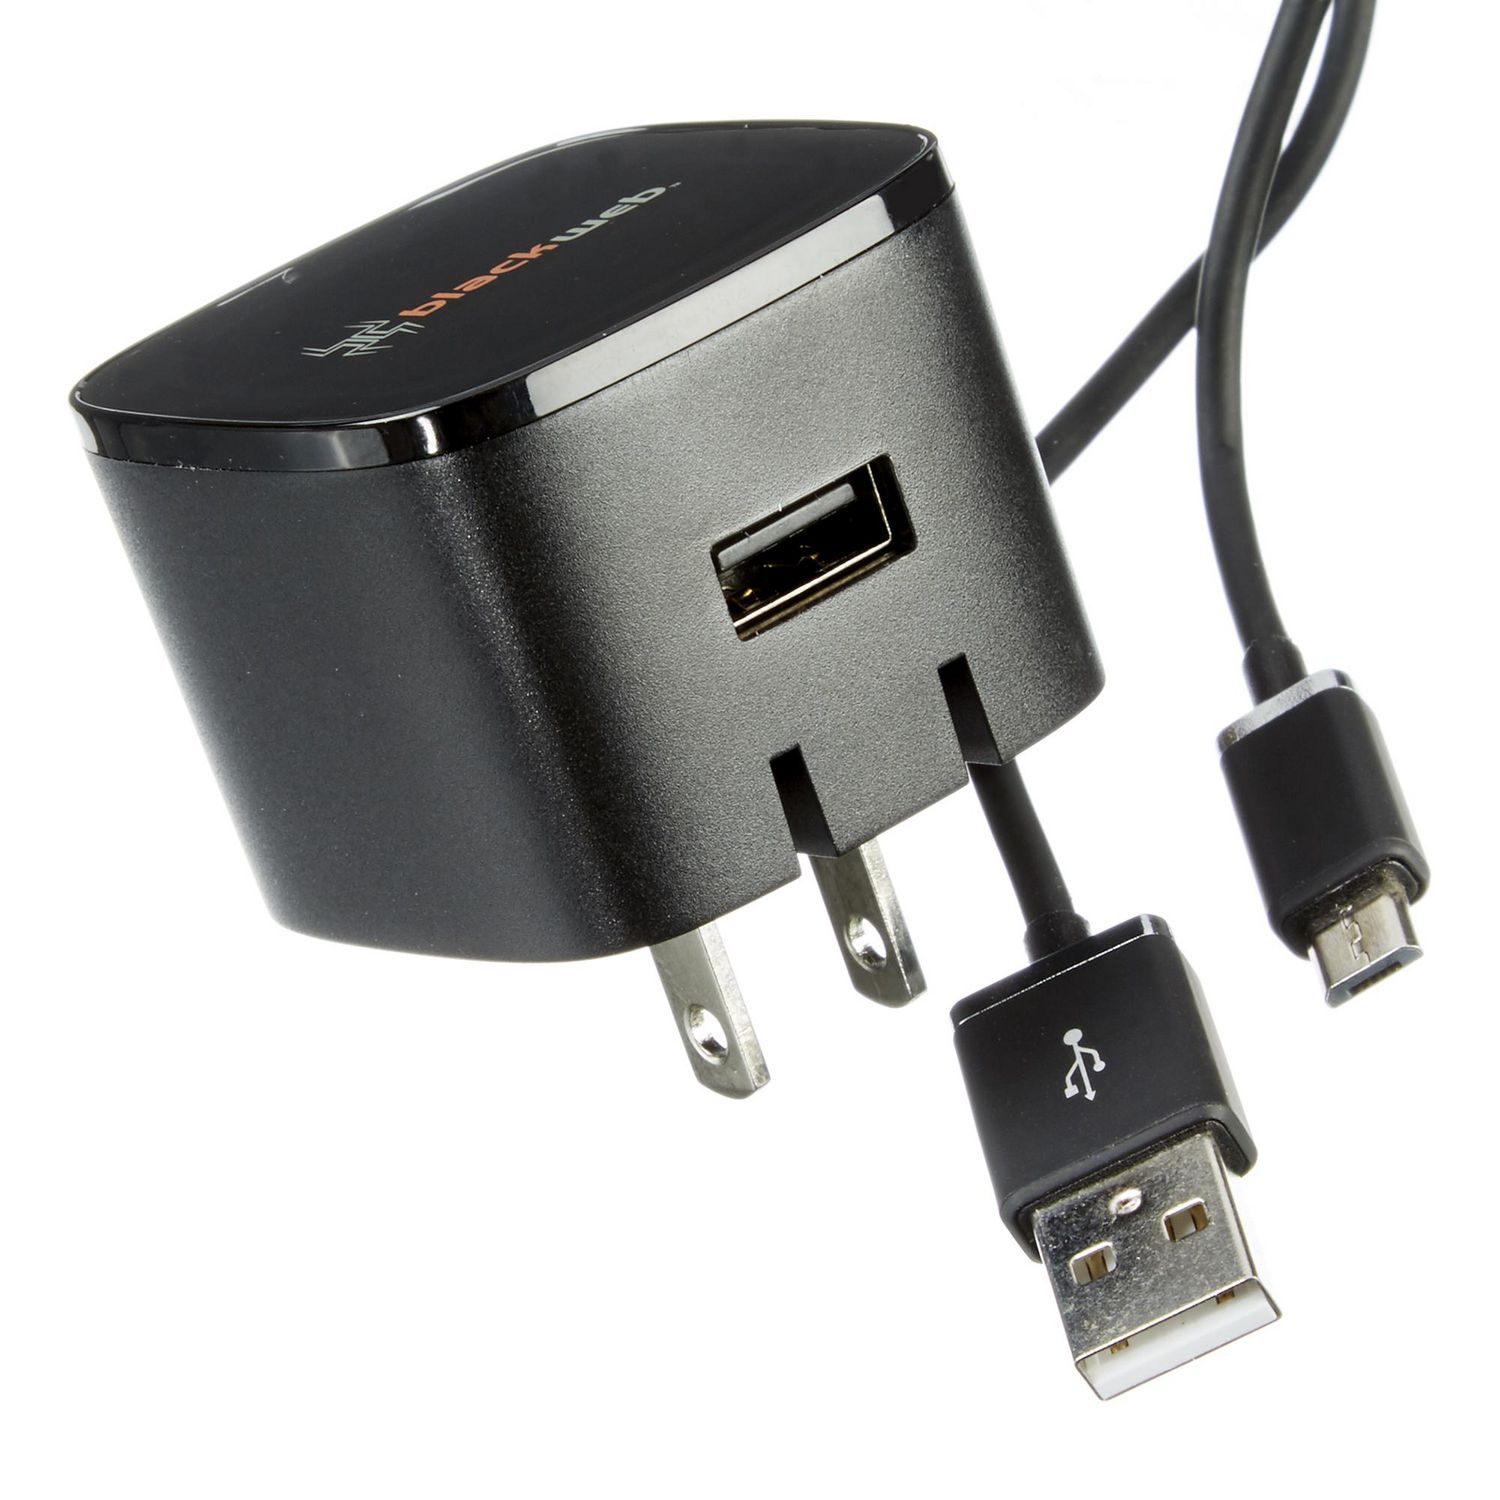 blackweb 2-in-1 Micro USB Wall Charger Kit | Walmart Canada